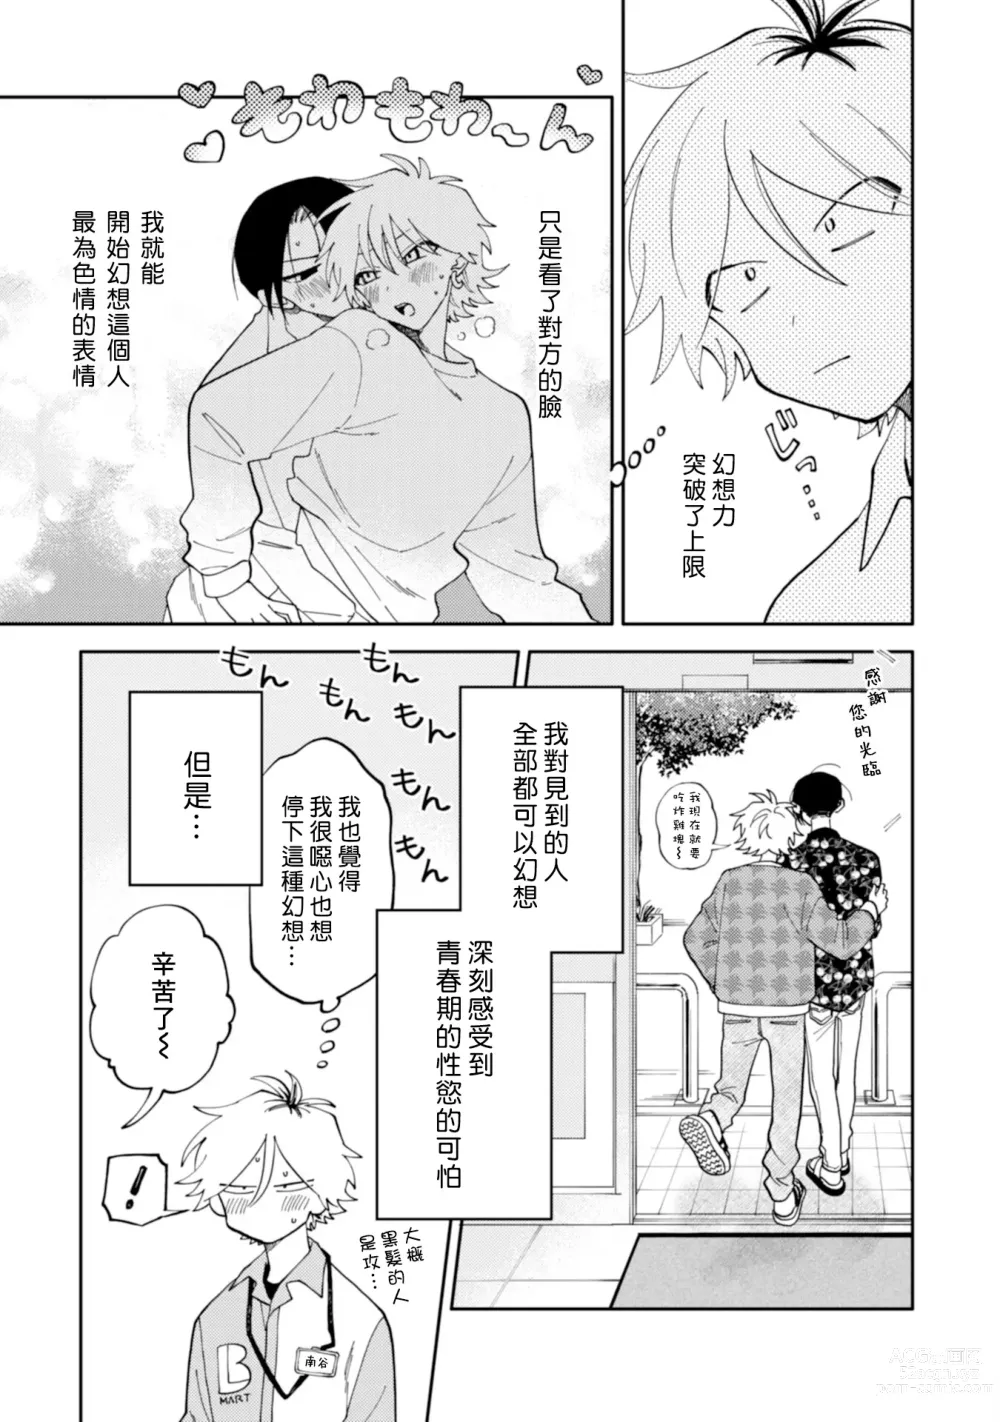 Page 7 of manga 北山君与南谷君